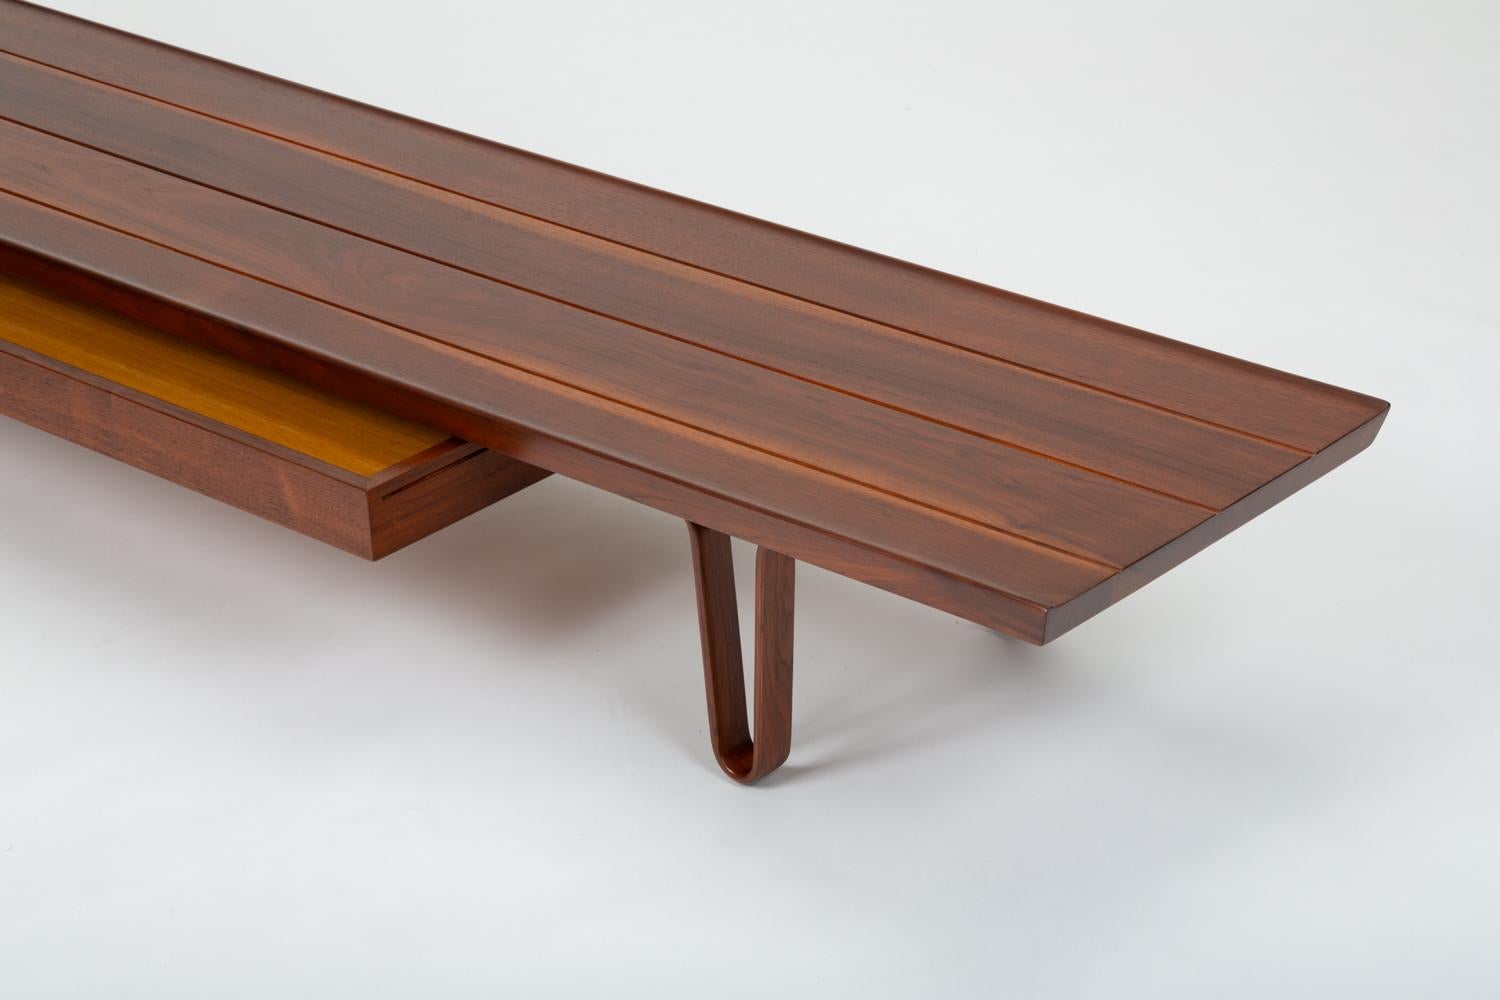 Walnut “Long John” Bench or Coffee Table by Edward Wormley for Dunbar 4